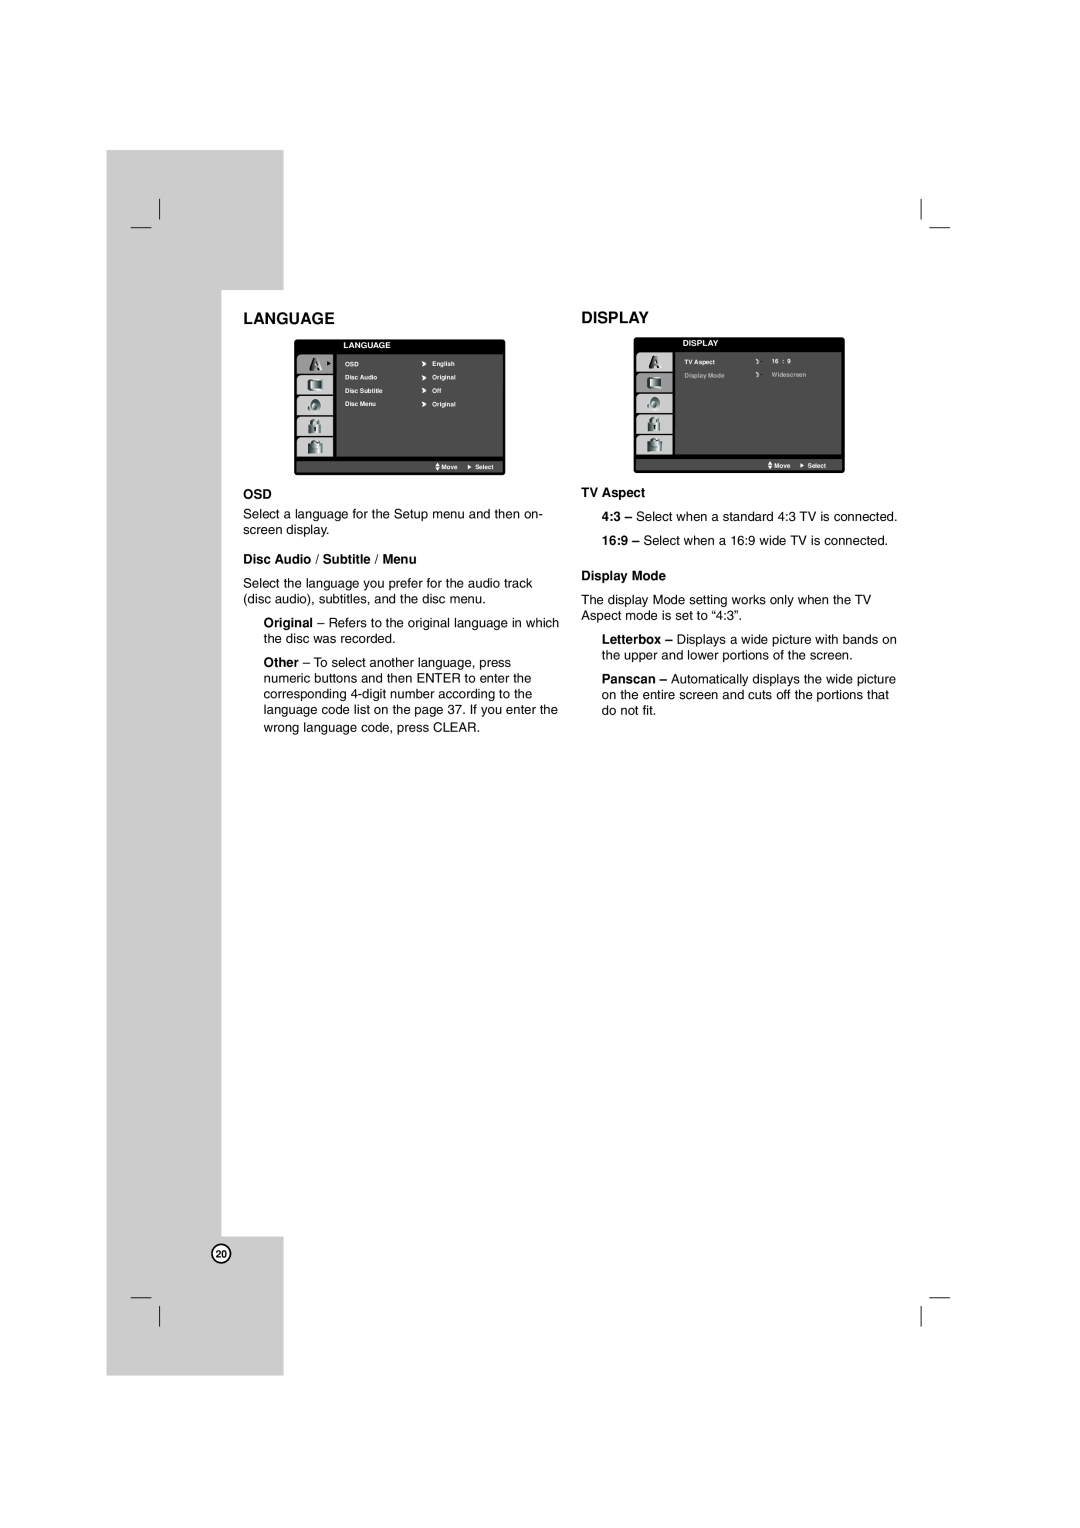 LG Electronics LHT764 owner manual Language, Disc Audio / Subtitle / Menu, TV Aspect, Display Mode 